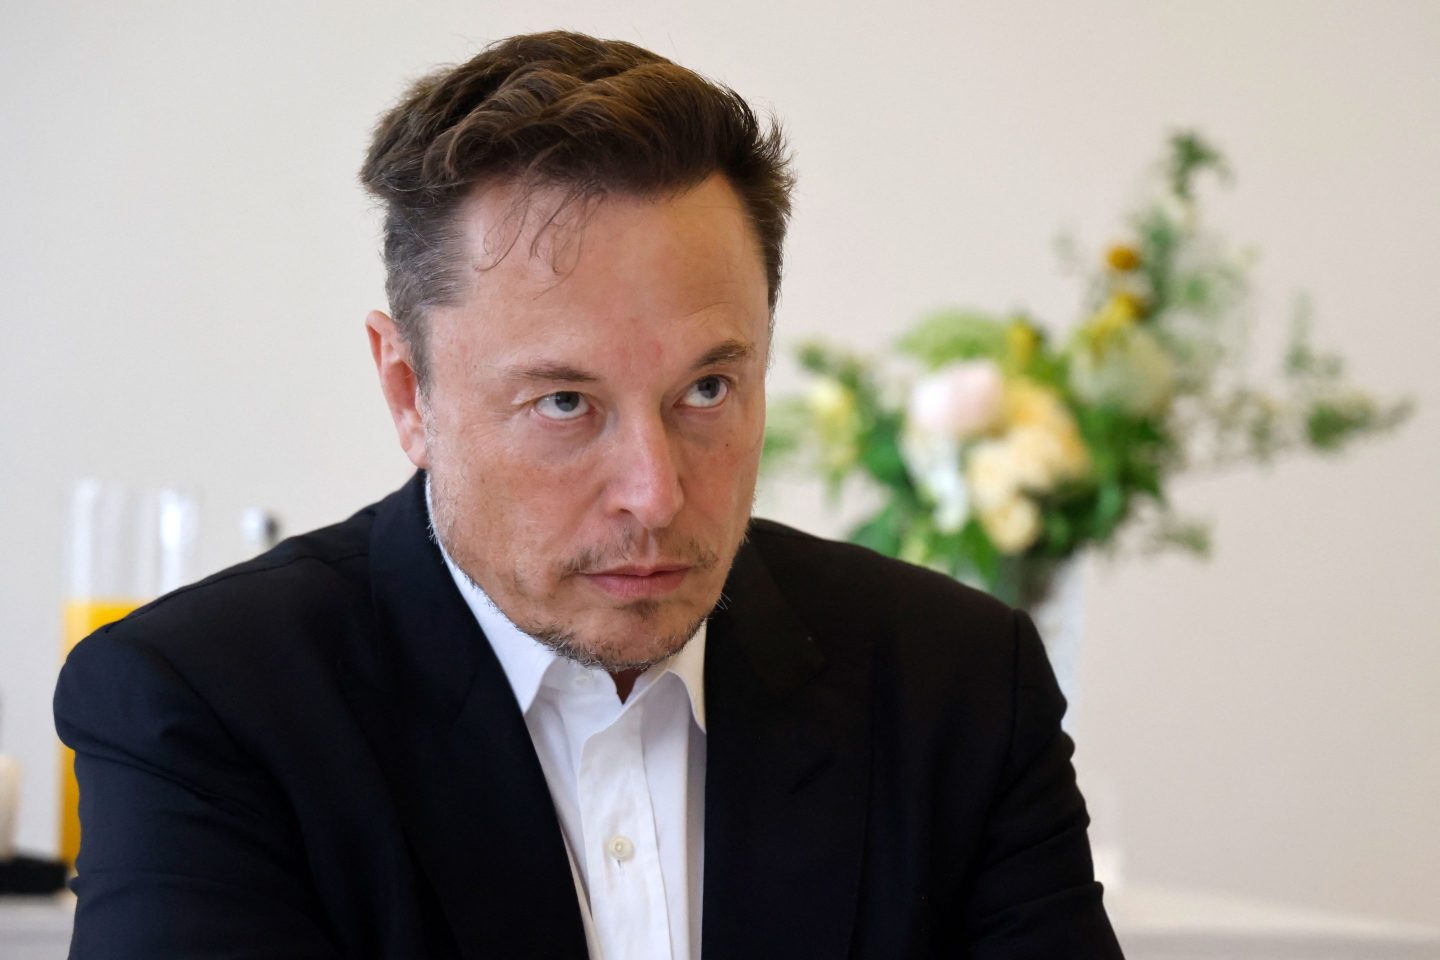 Electric car maker Tesla CEO Elon Musk